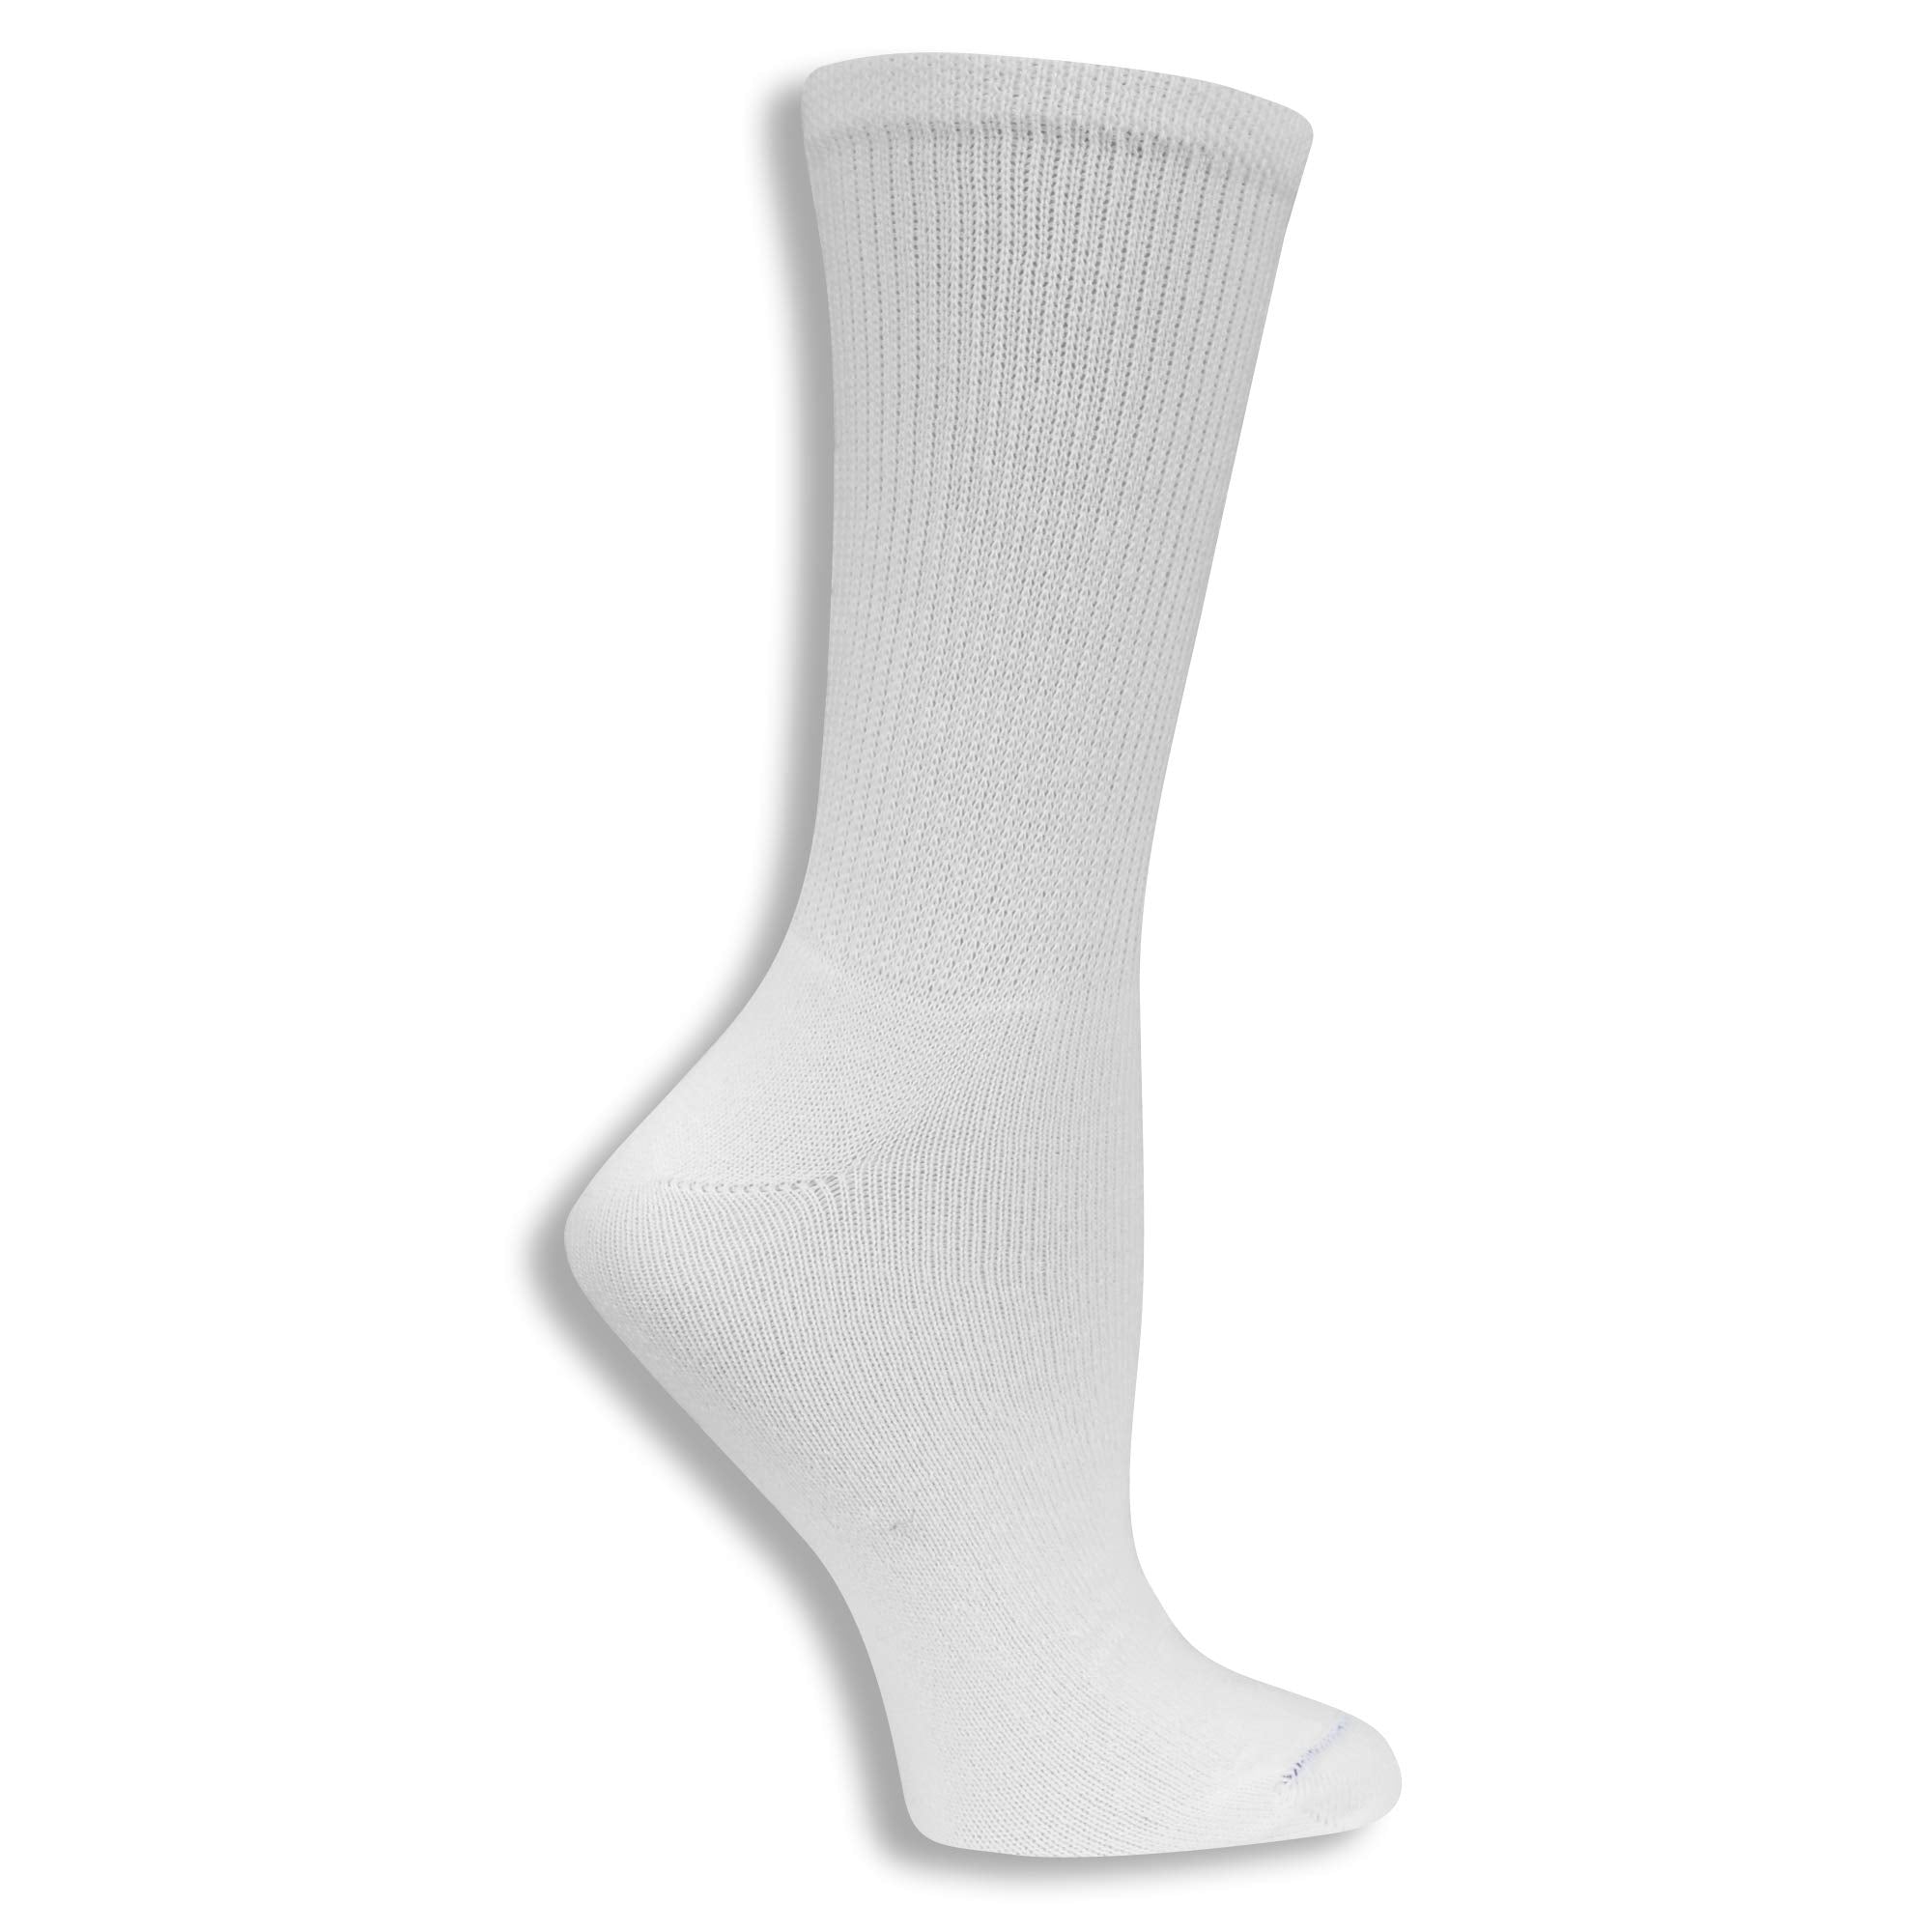 Men's Advanced Half Cushion Quarter Socks (6 Pack)